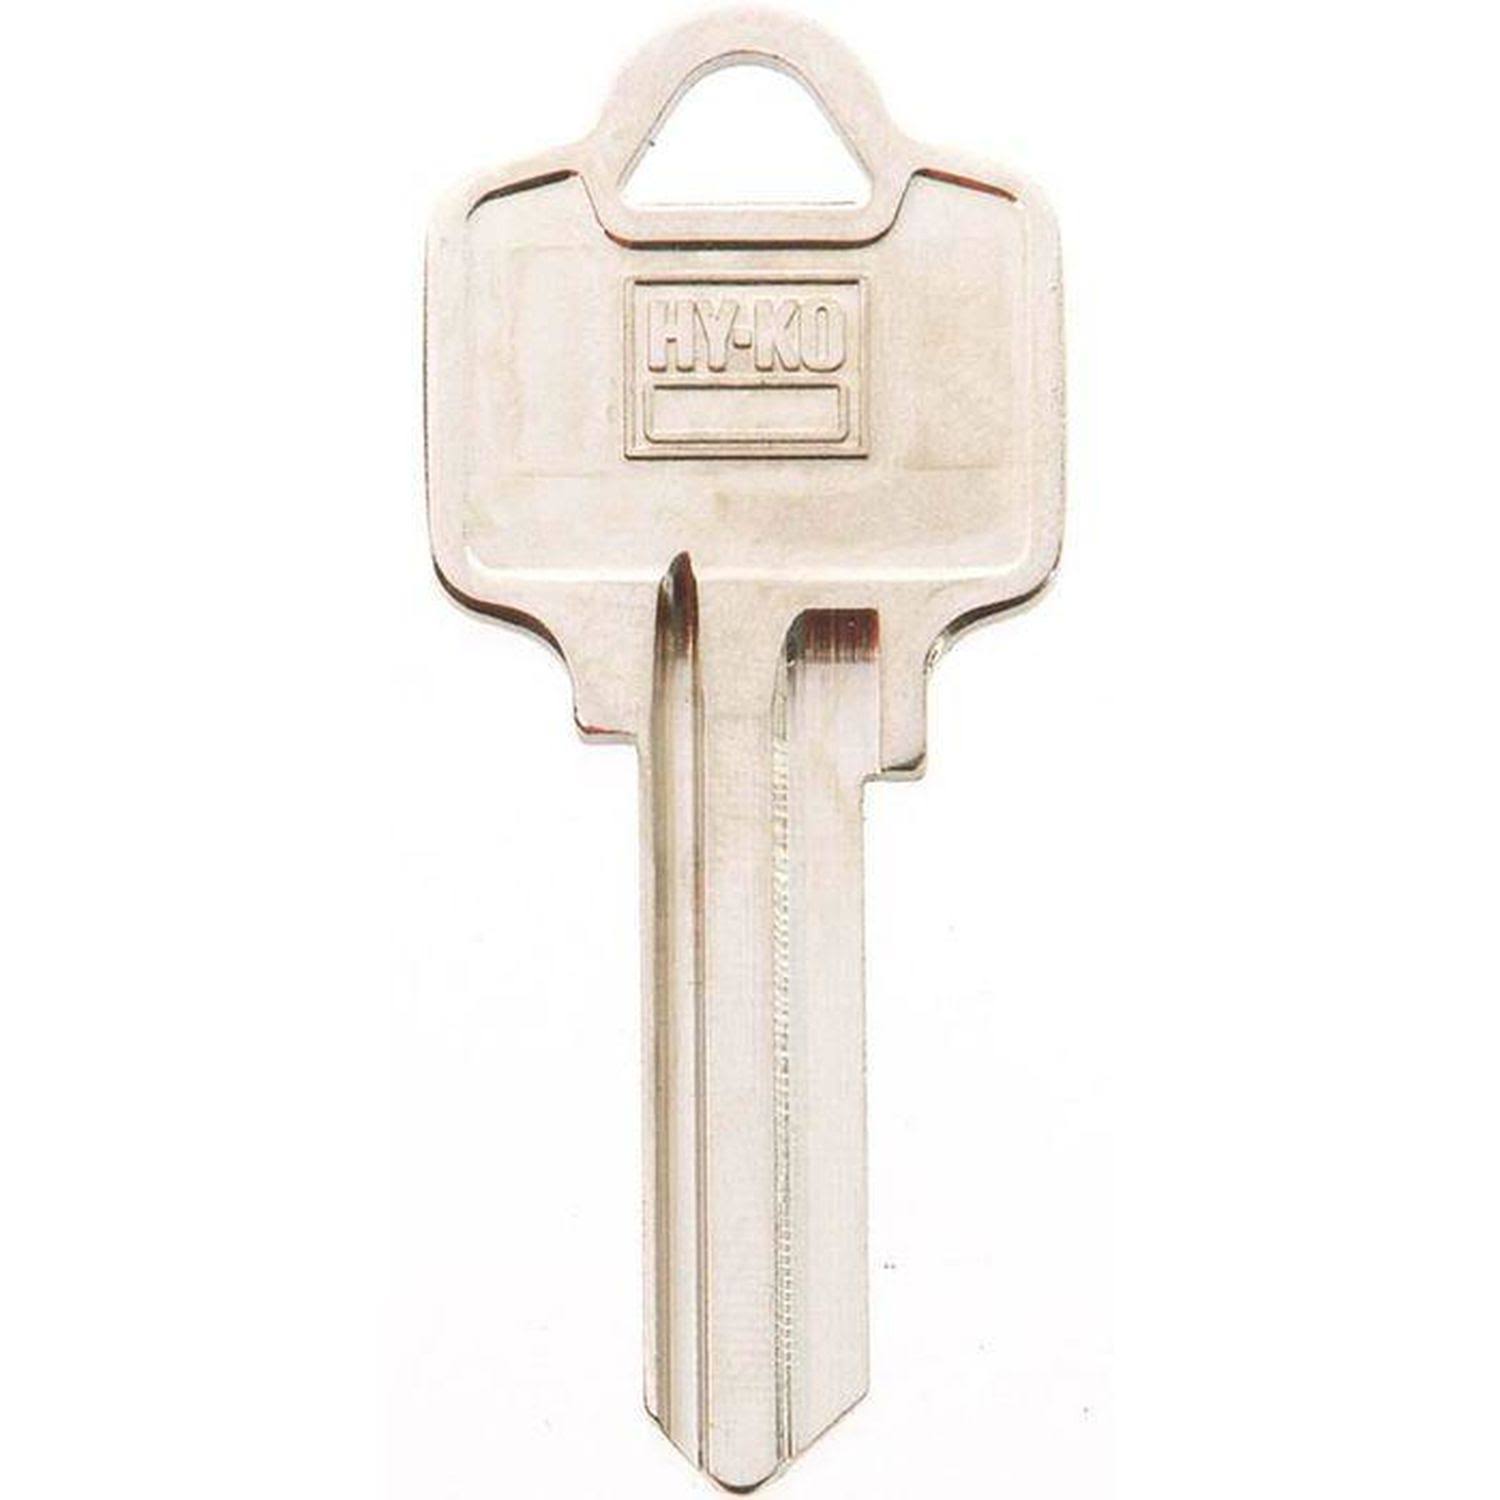 Hy-Ko Blank Arrow Lock Key